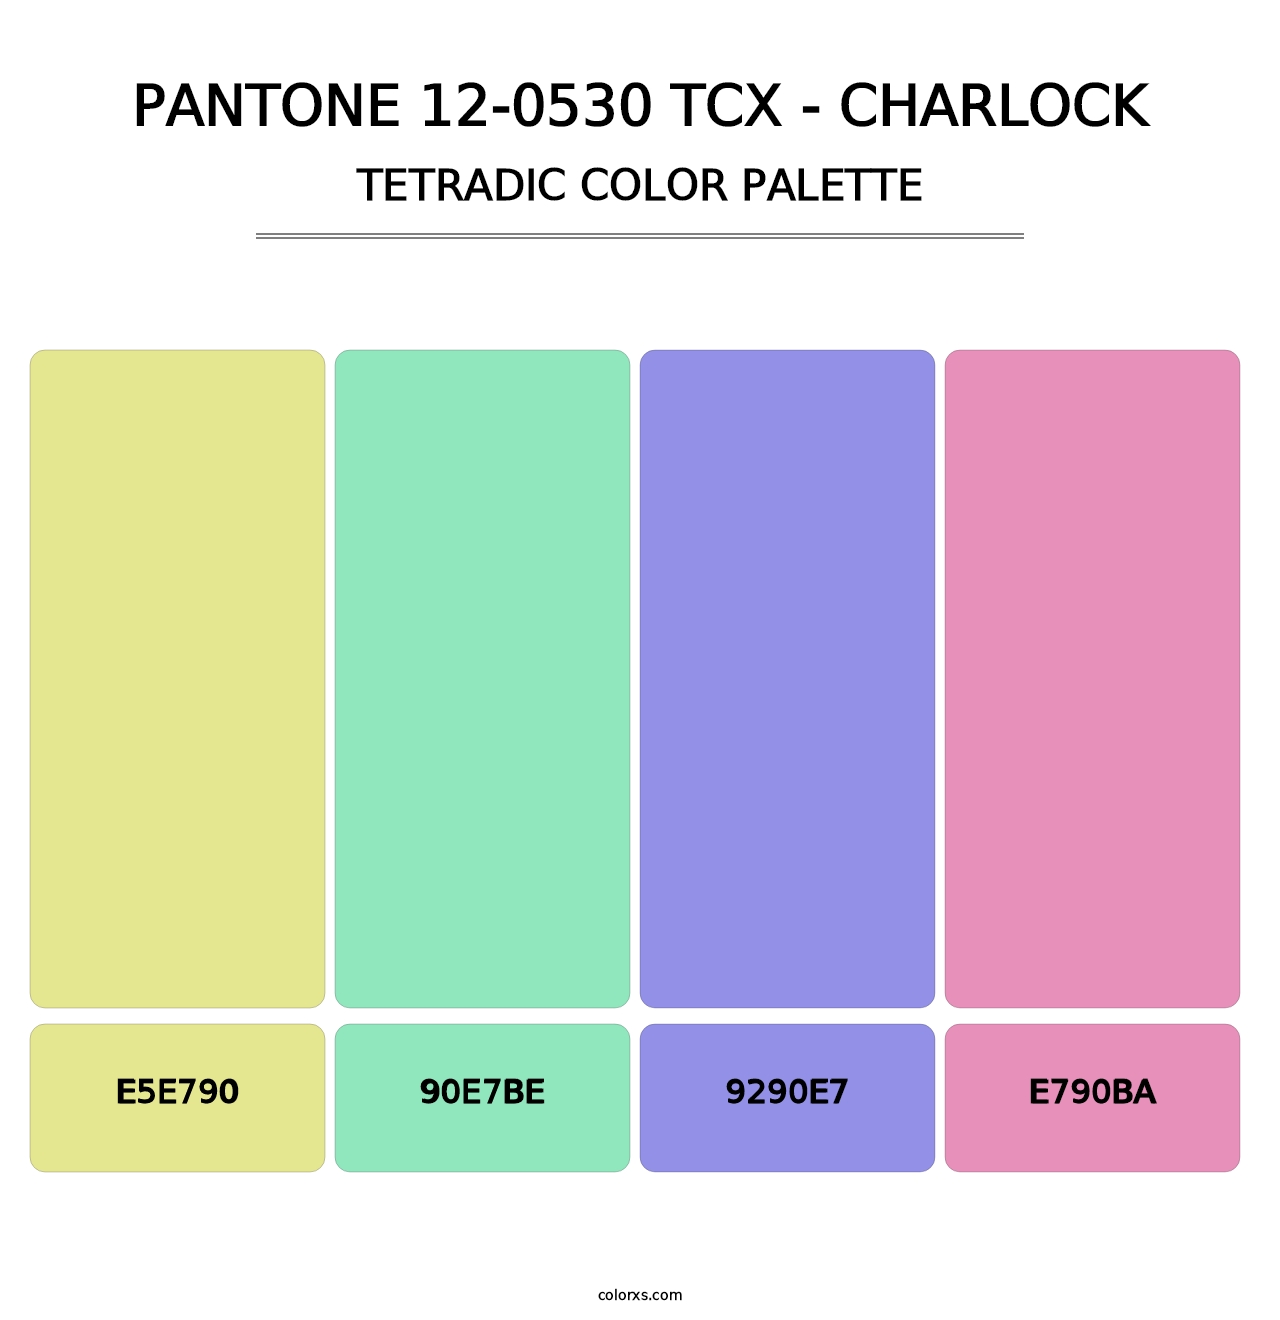 PANTONE 12-0530 TCX - Charlock - Tetradic Color Palette